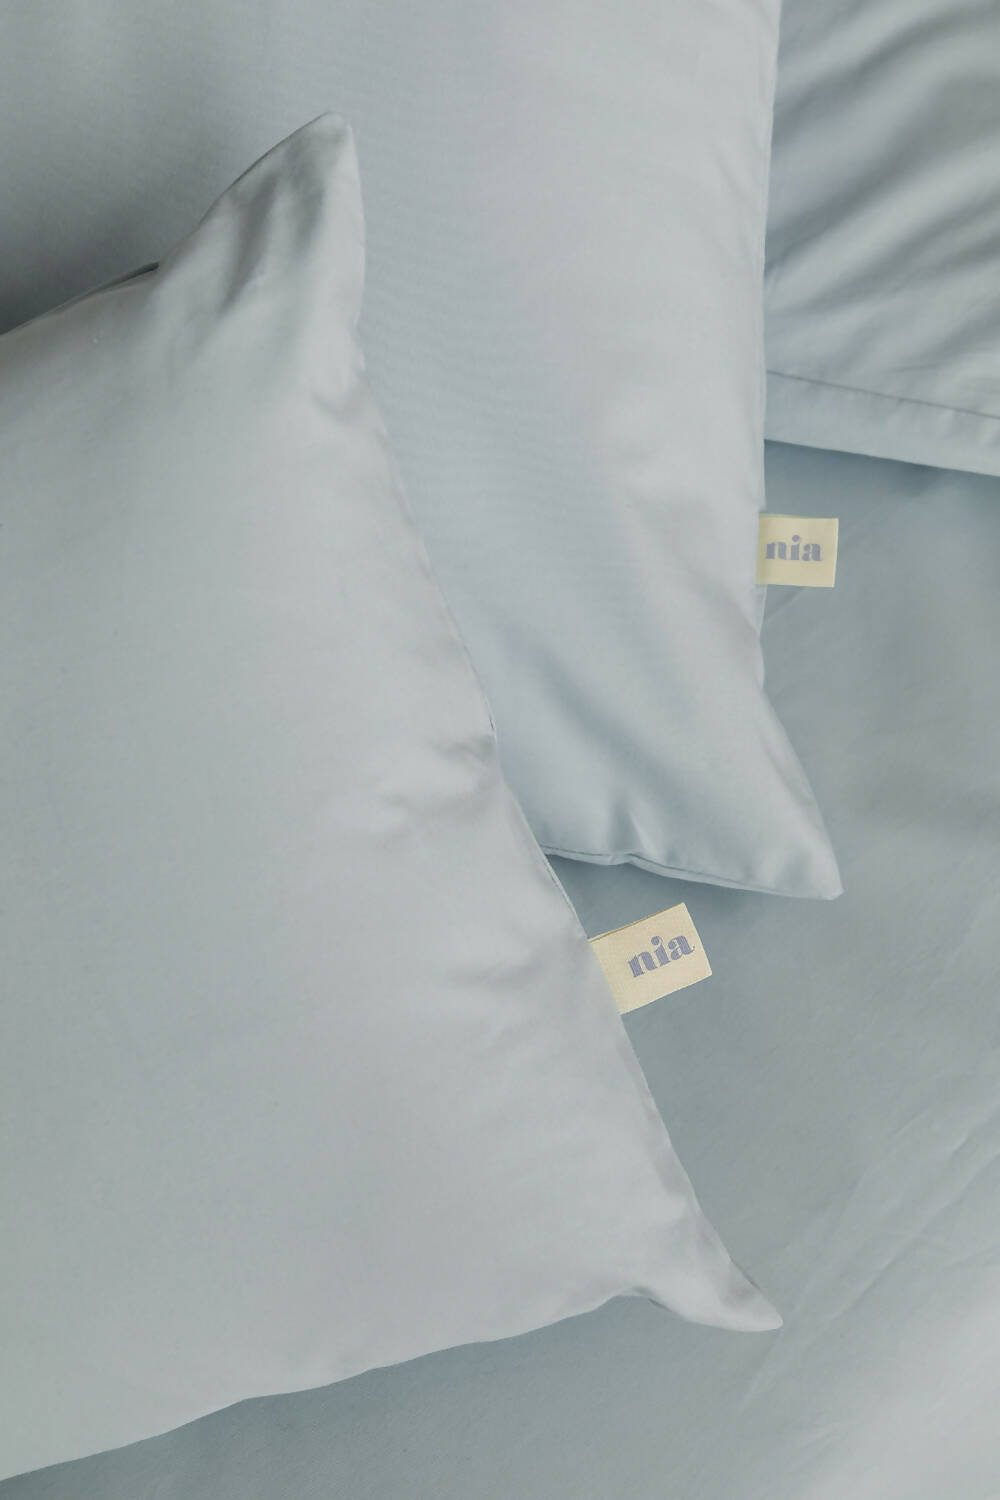 Bed Linen Set - Baby Cloud Blue